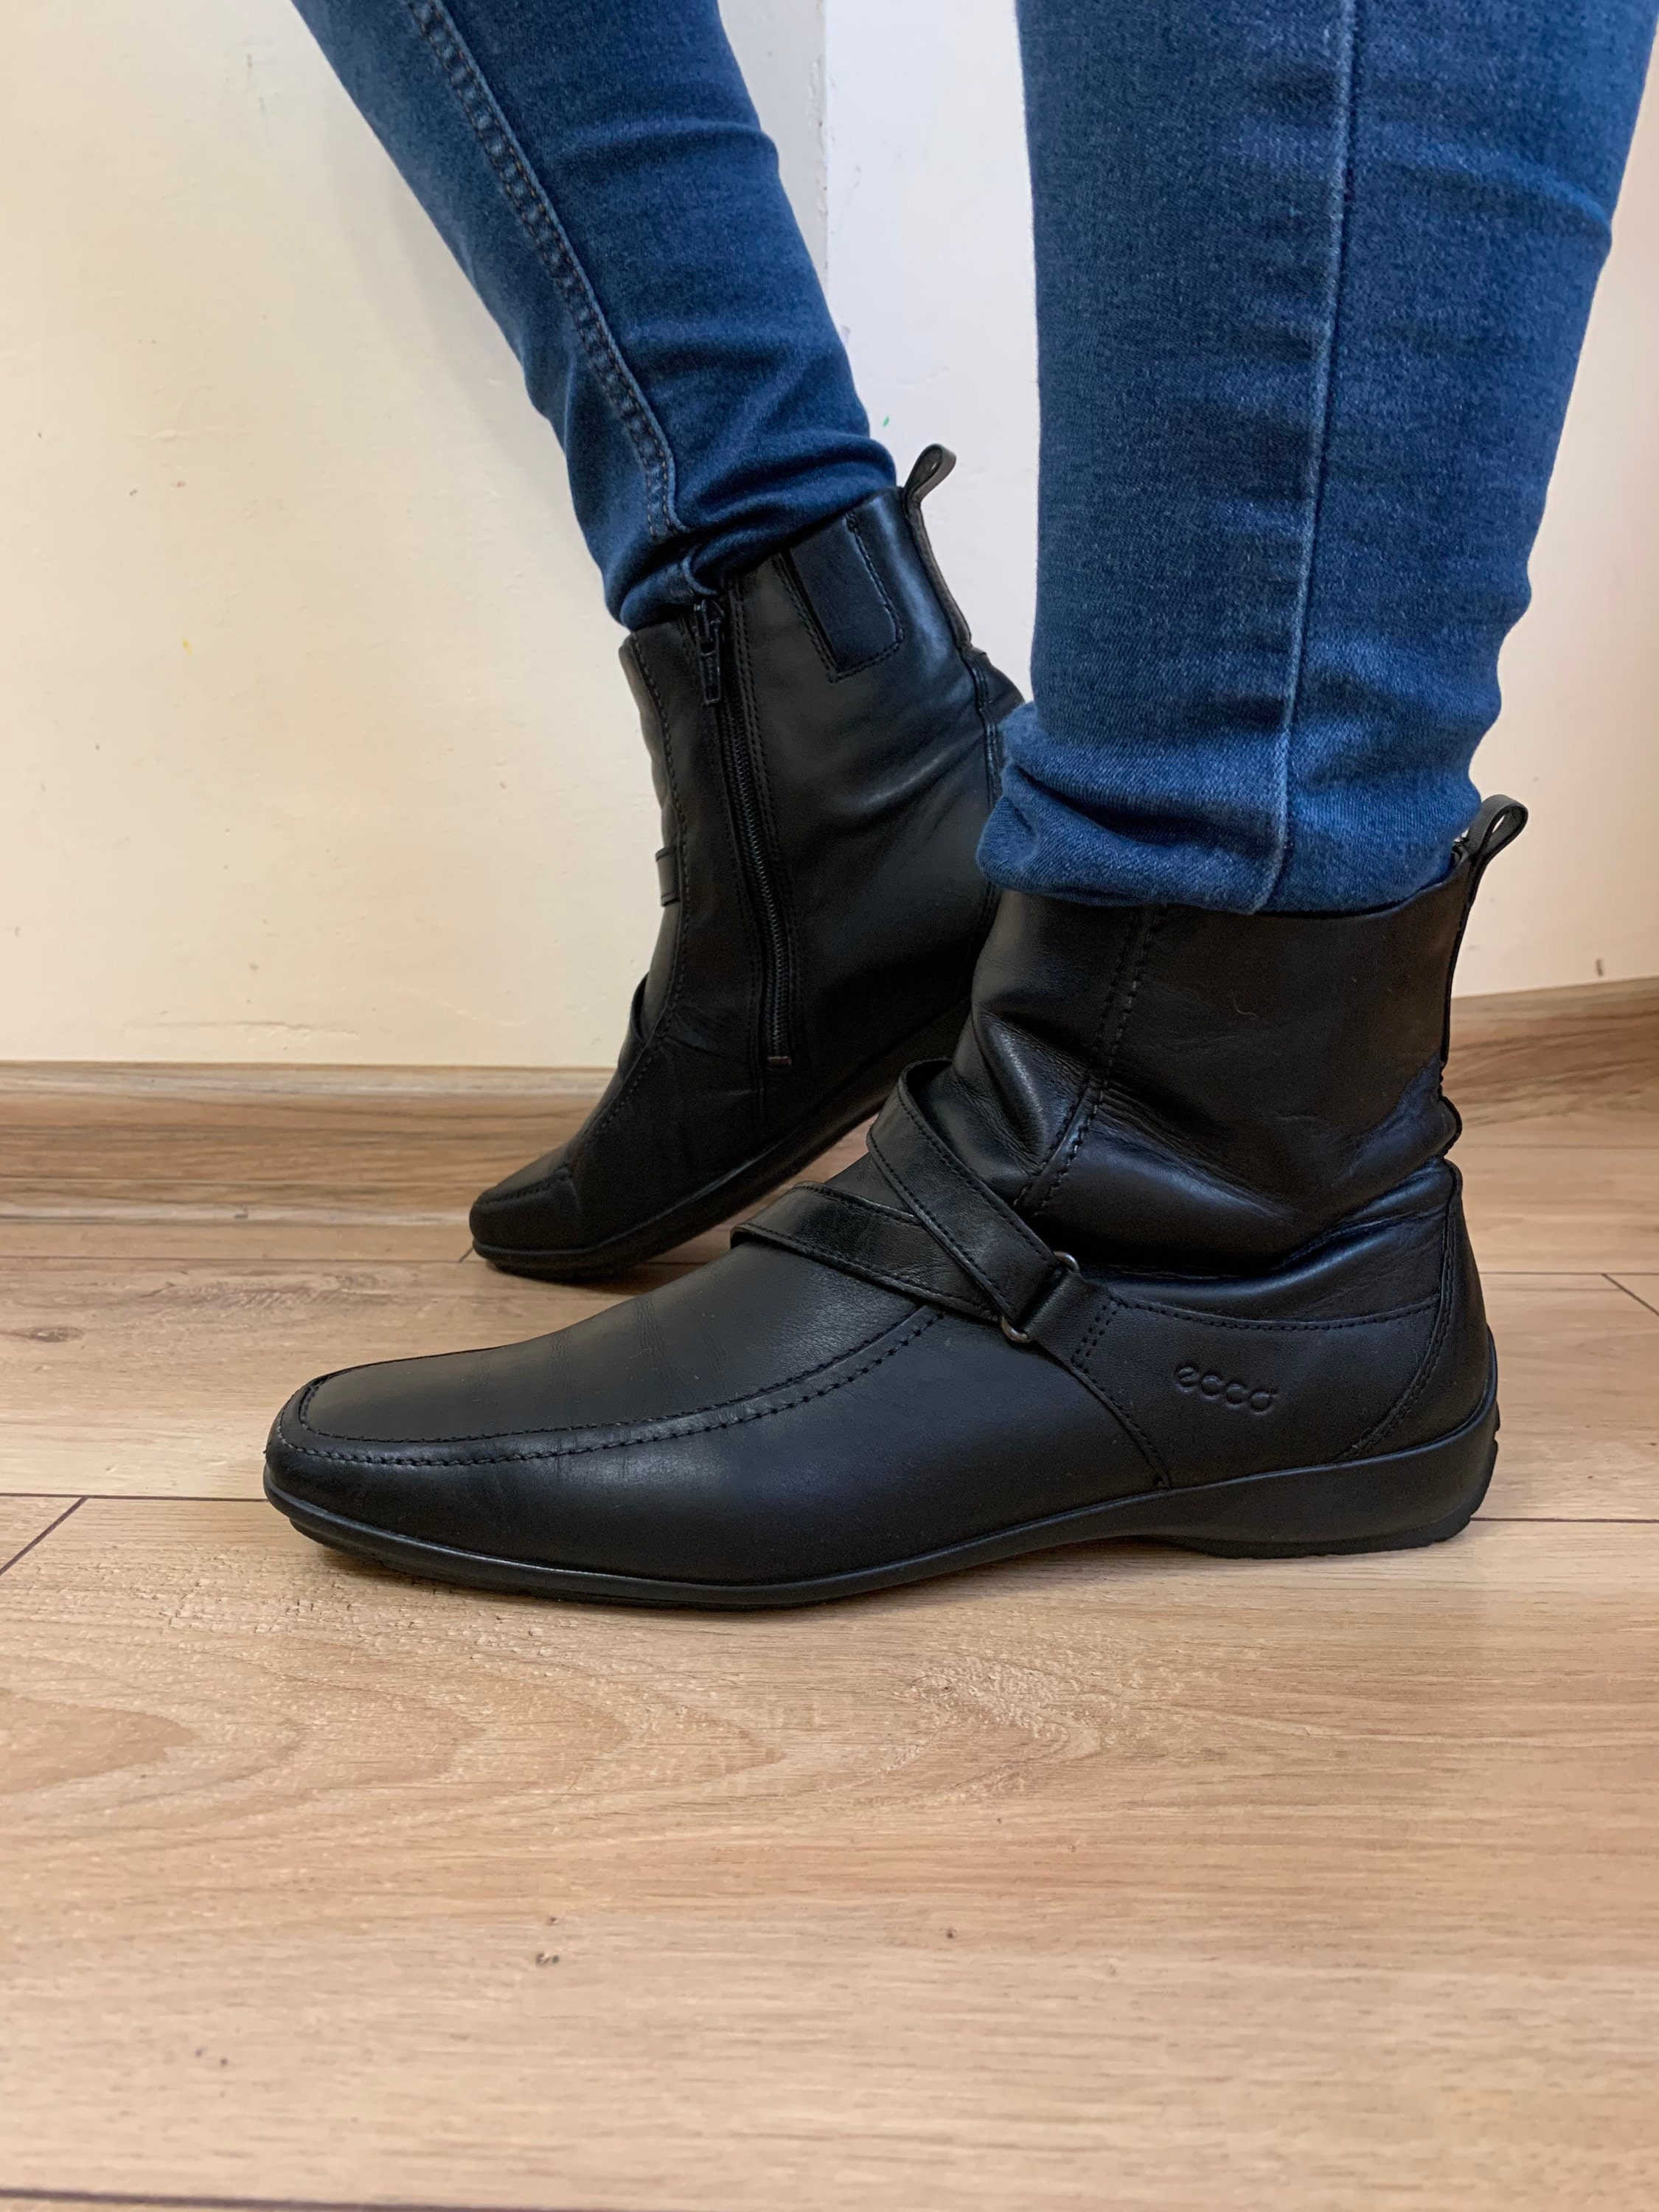 Women's Black Flat Ankle Boots Vintage Ecco - Etsy